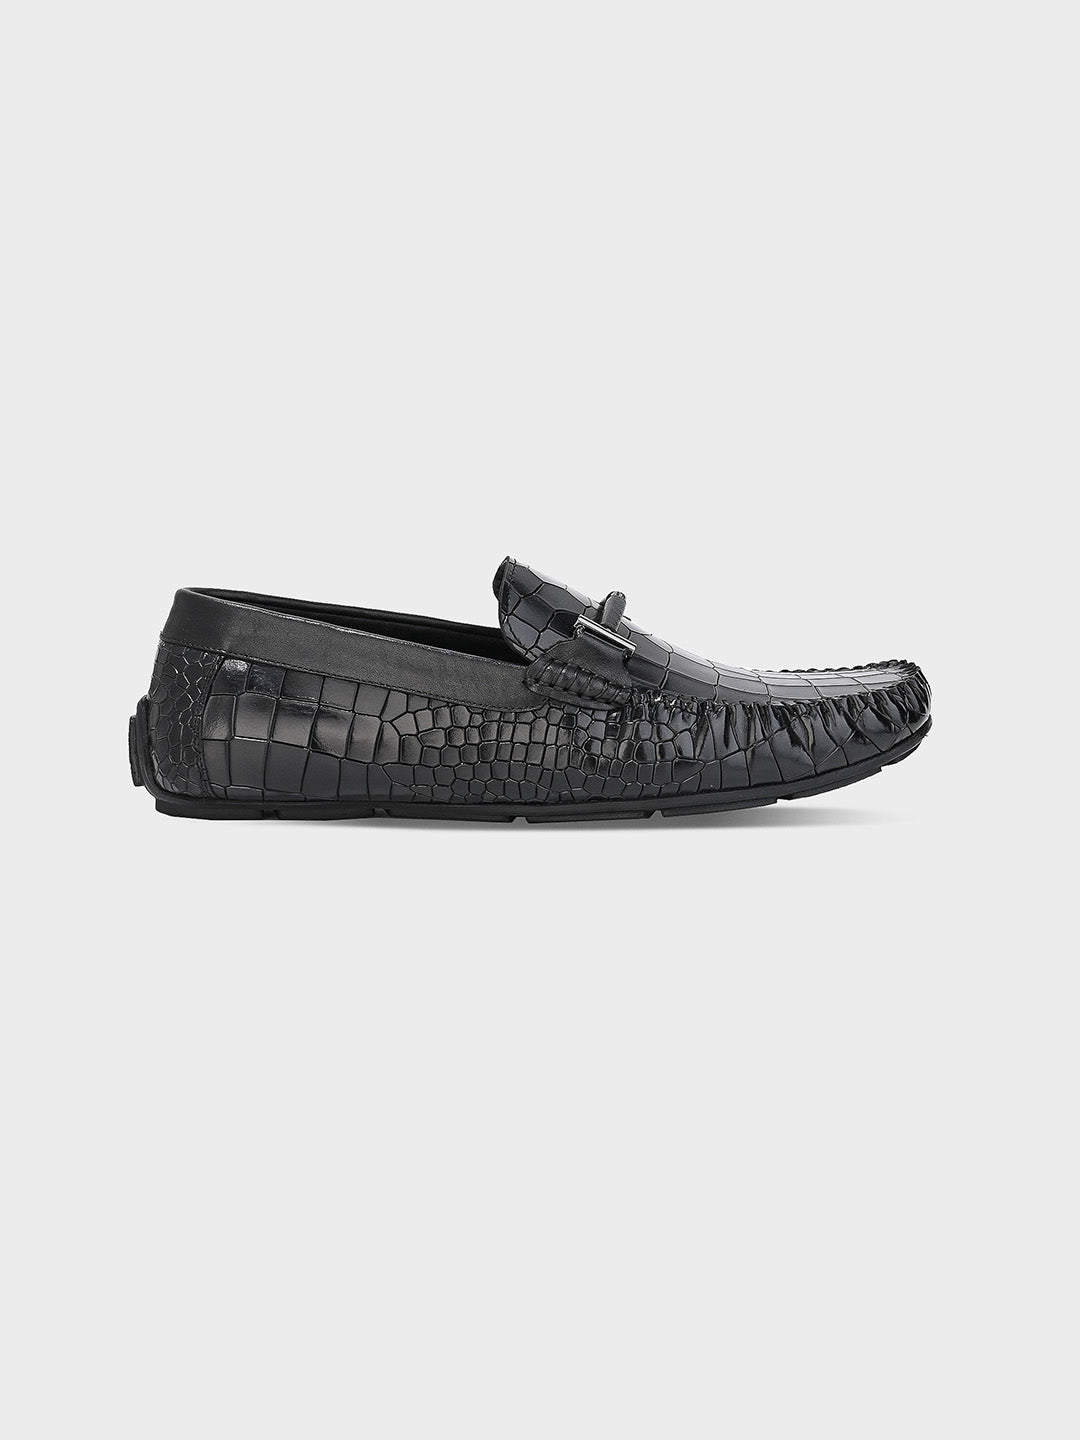 Sleek Black Leather Men's Slip-On Loafer Shoes – One8 Select